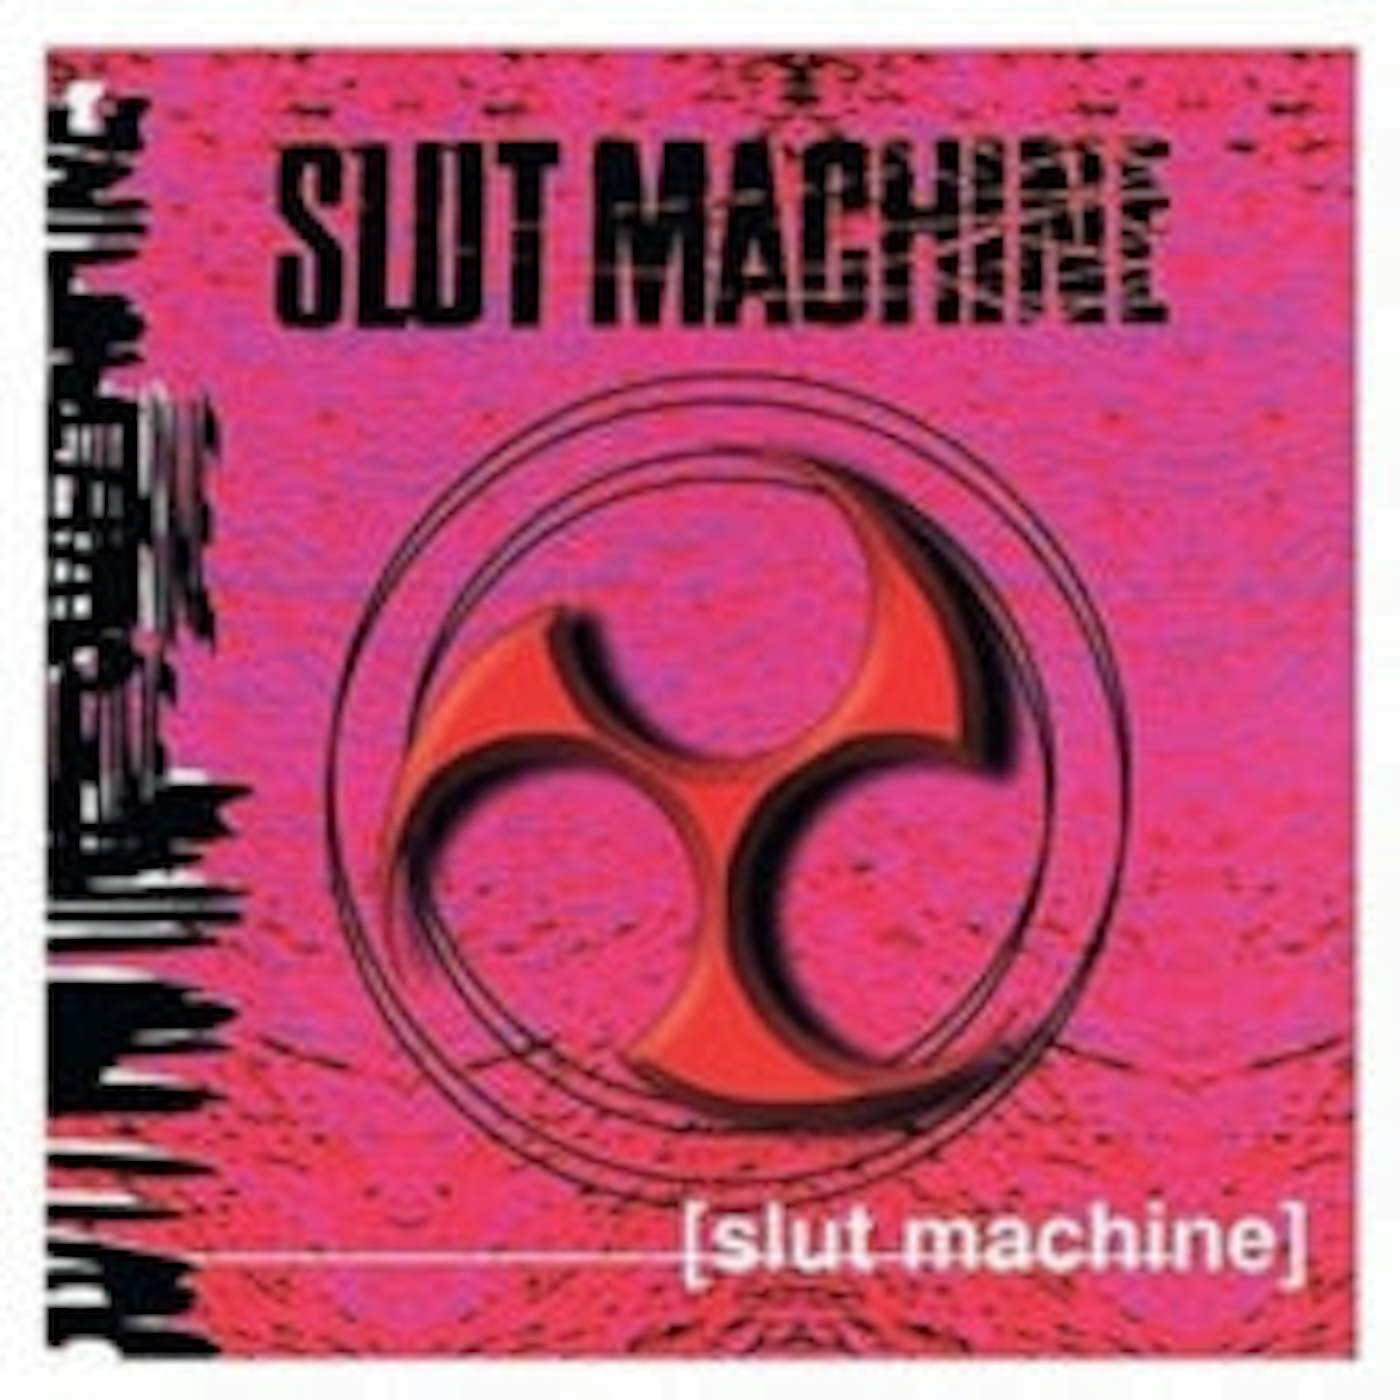 The Slut Machine CD - Slut Machine